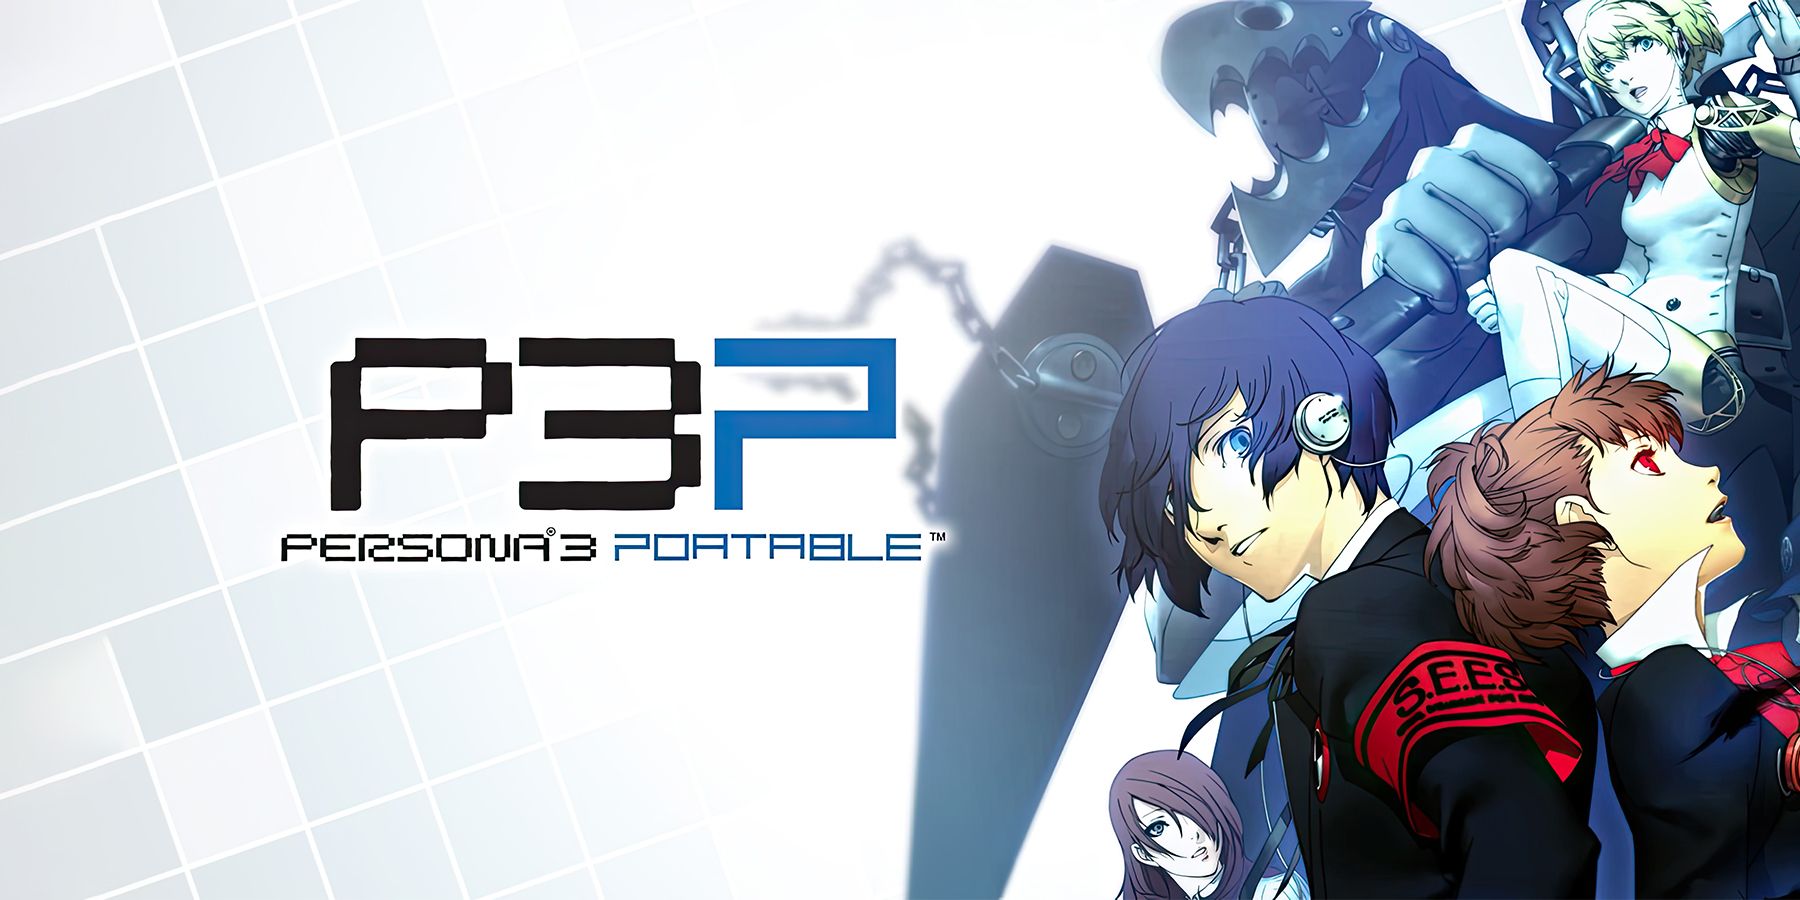 Persona 3 Portable cover artwork widened